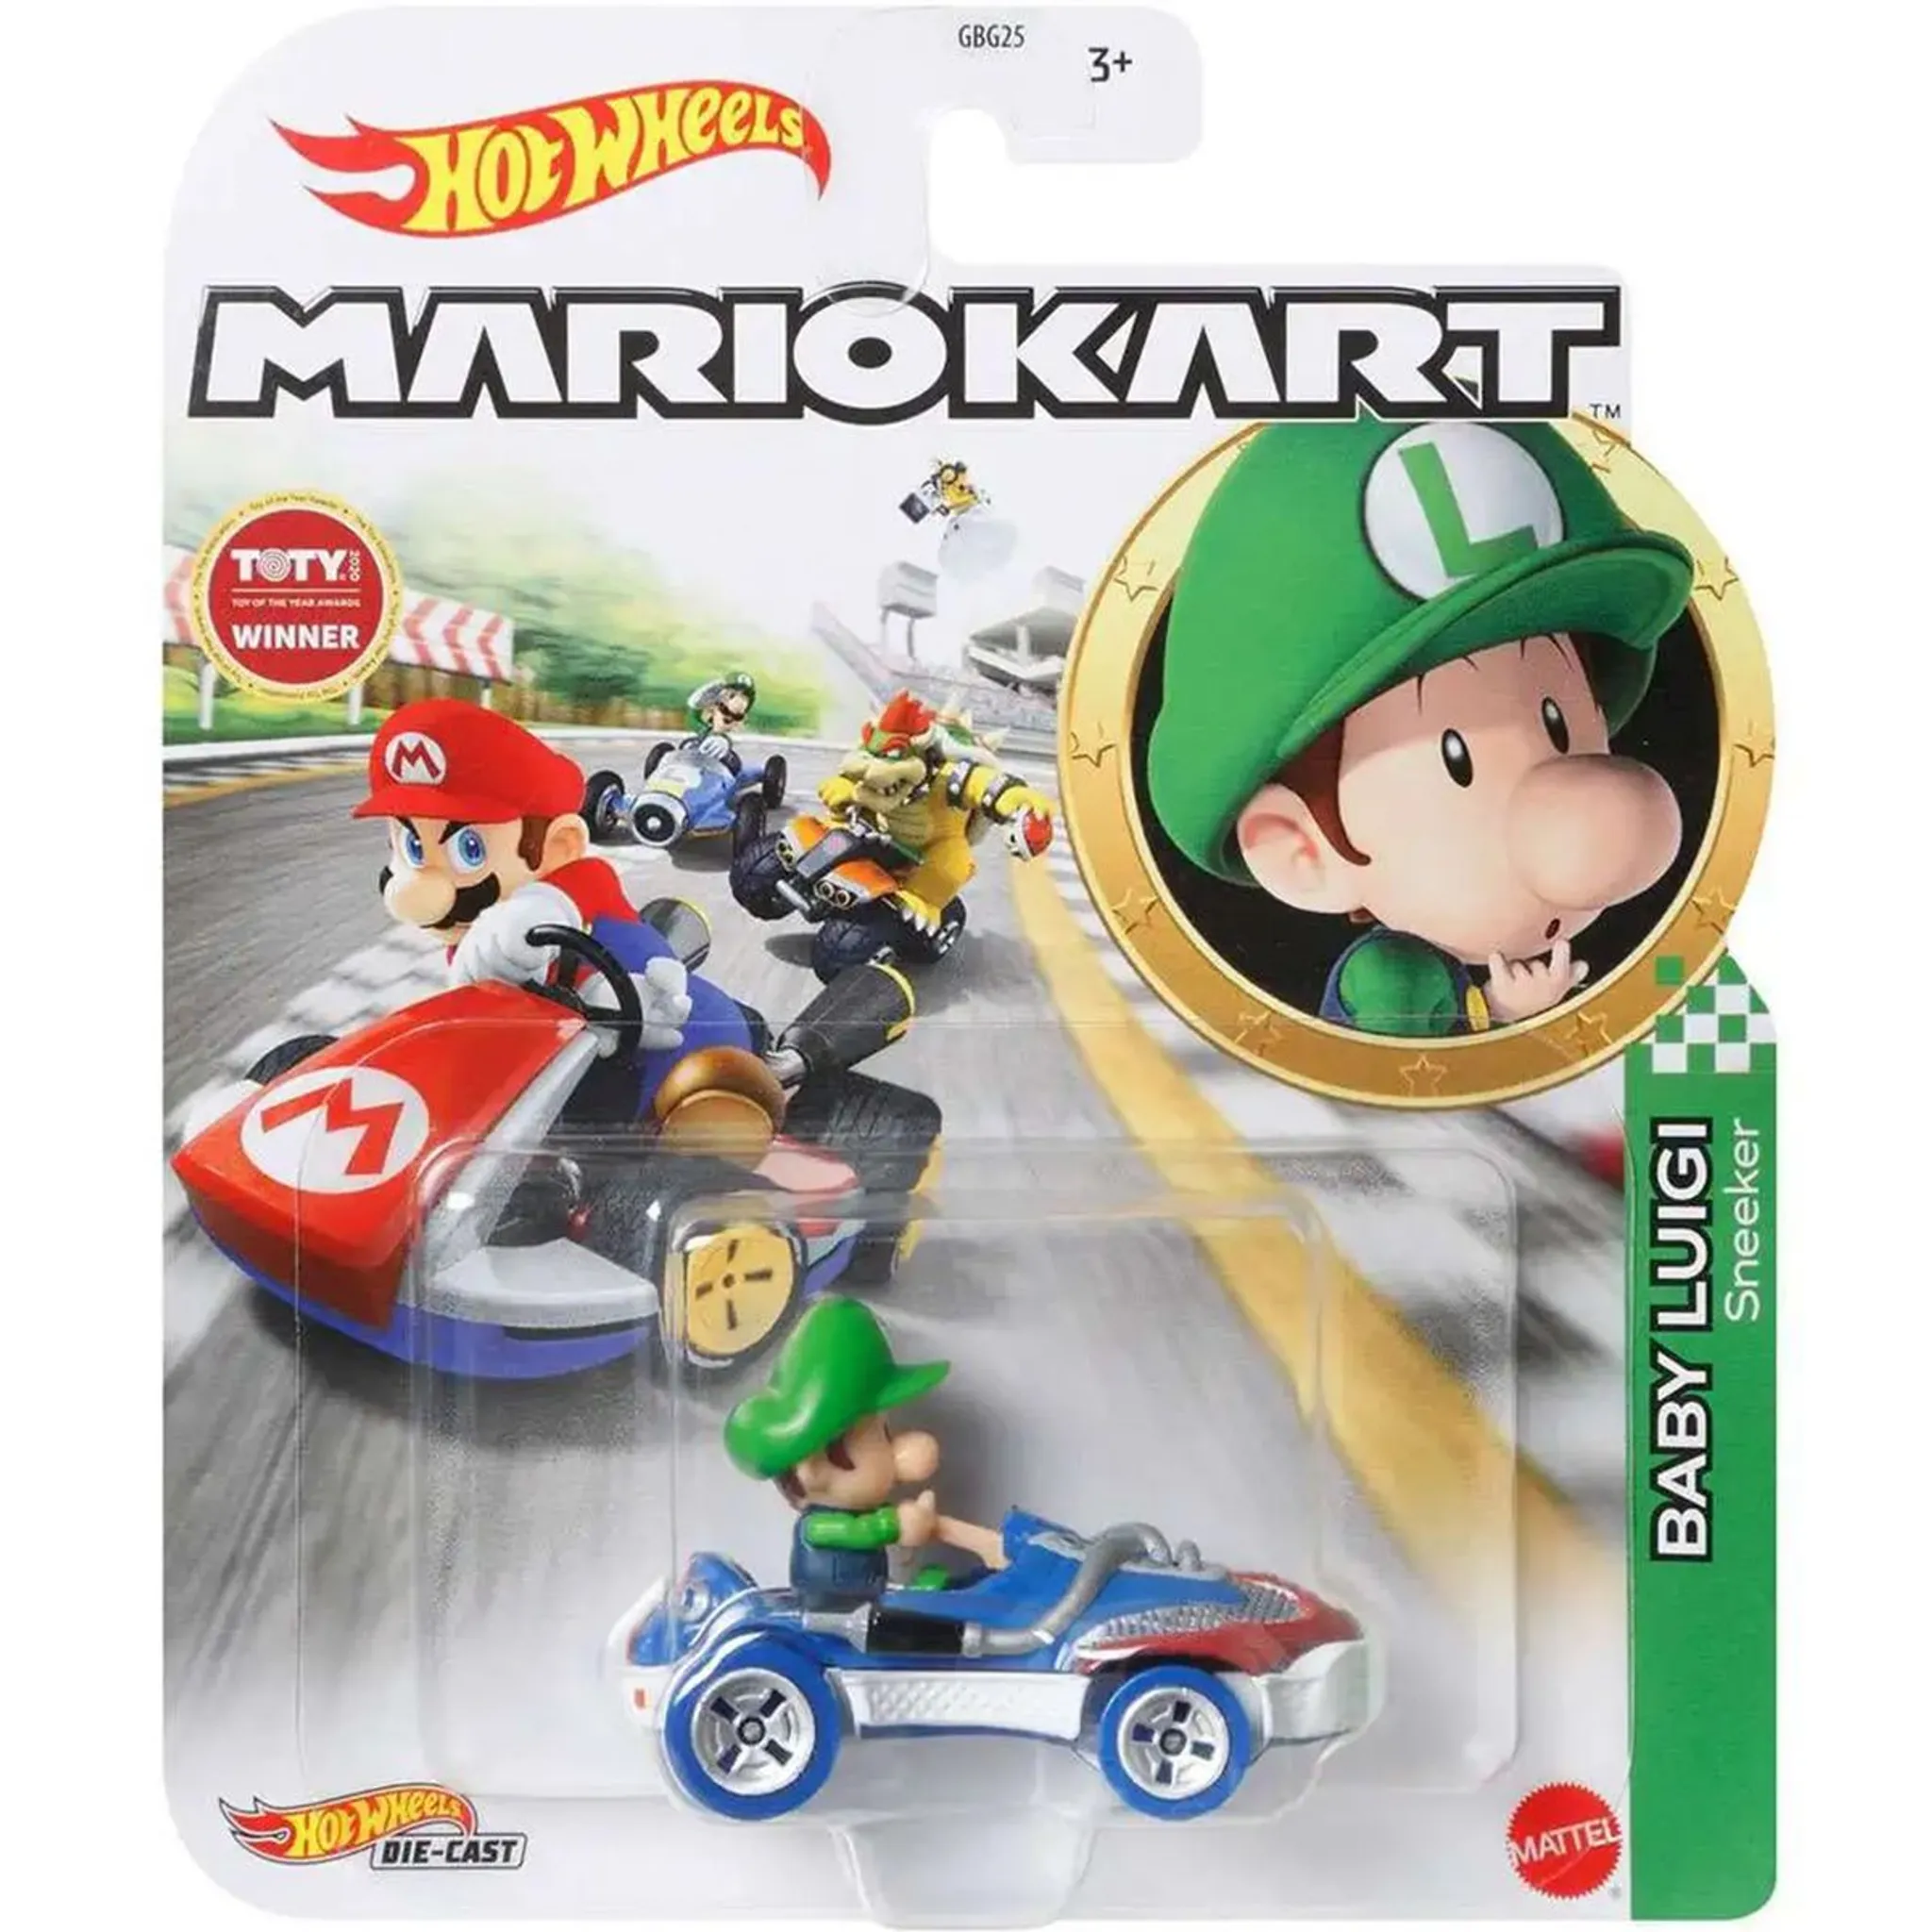 Wheels Mattel HDB28 Mario - GBG25; Kart Hot